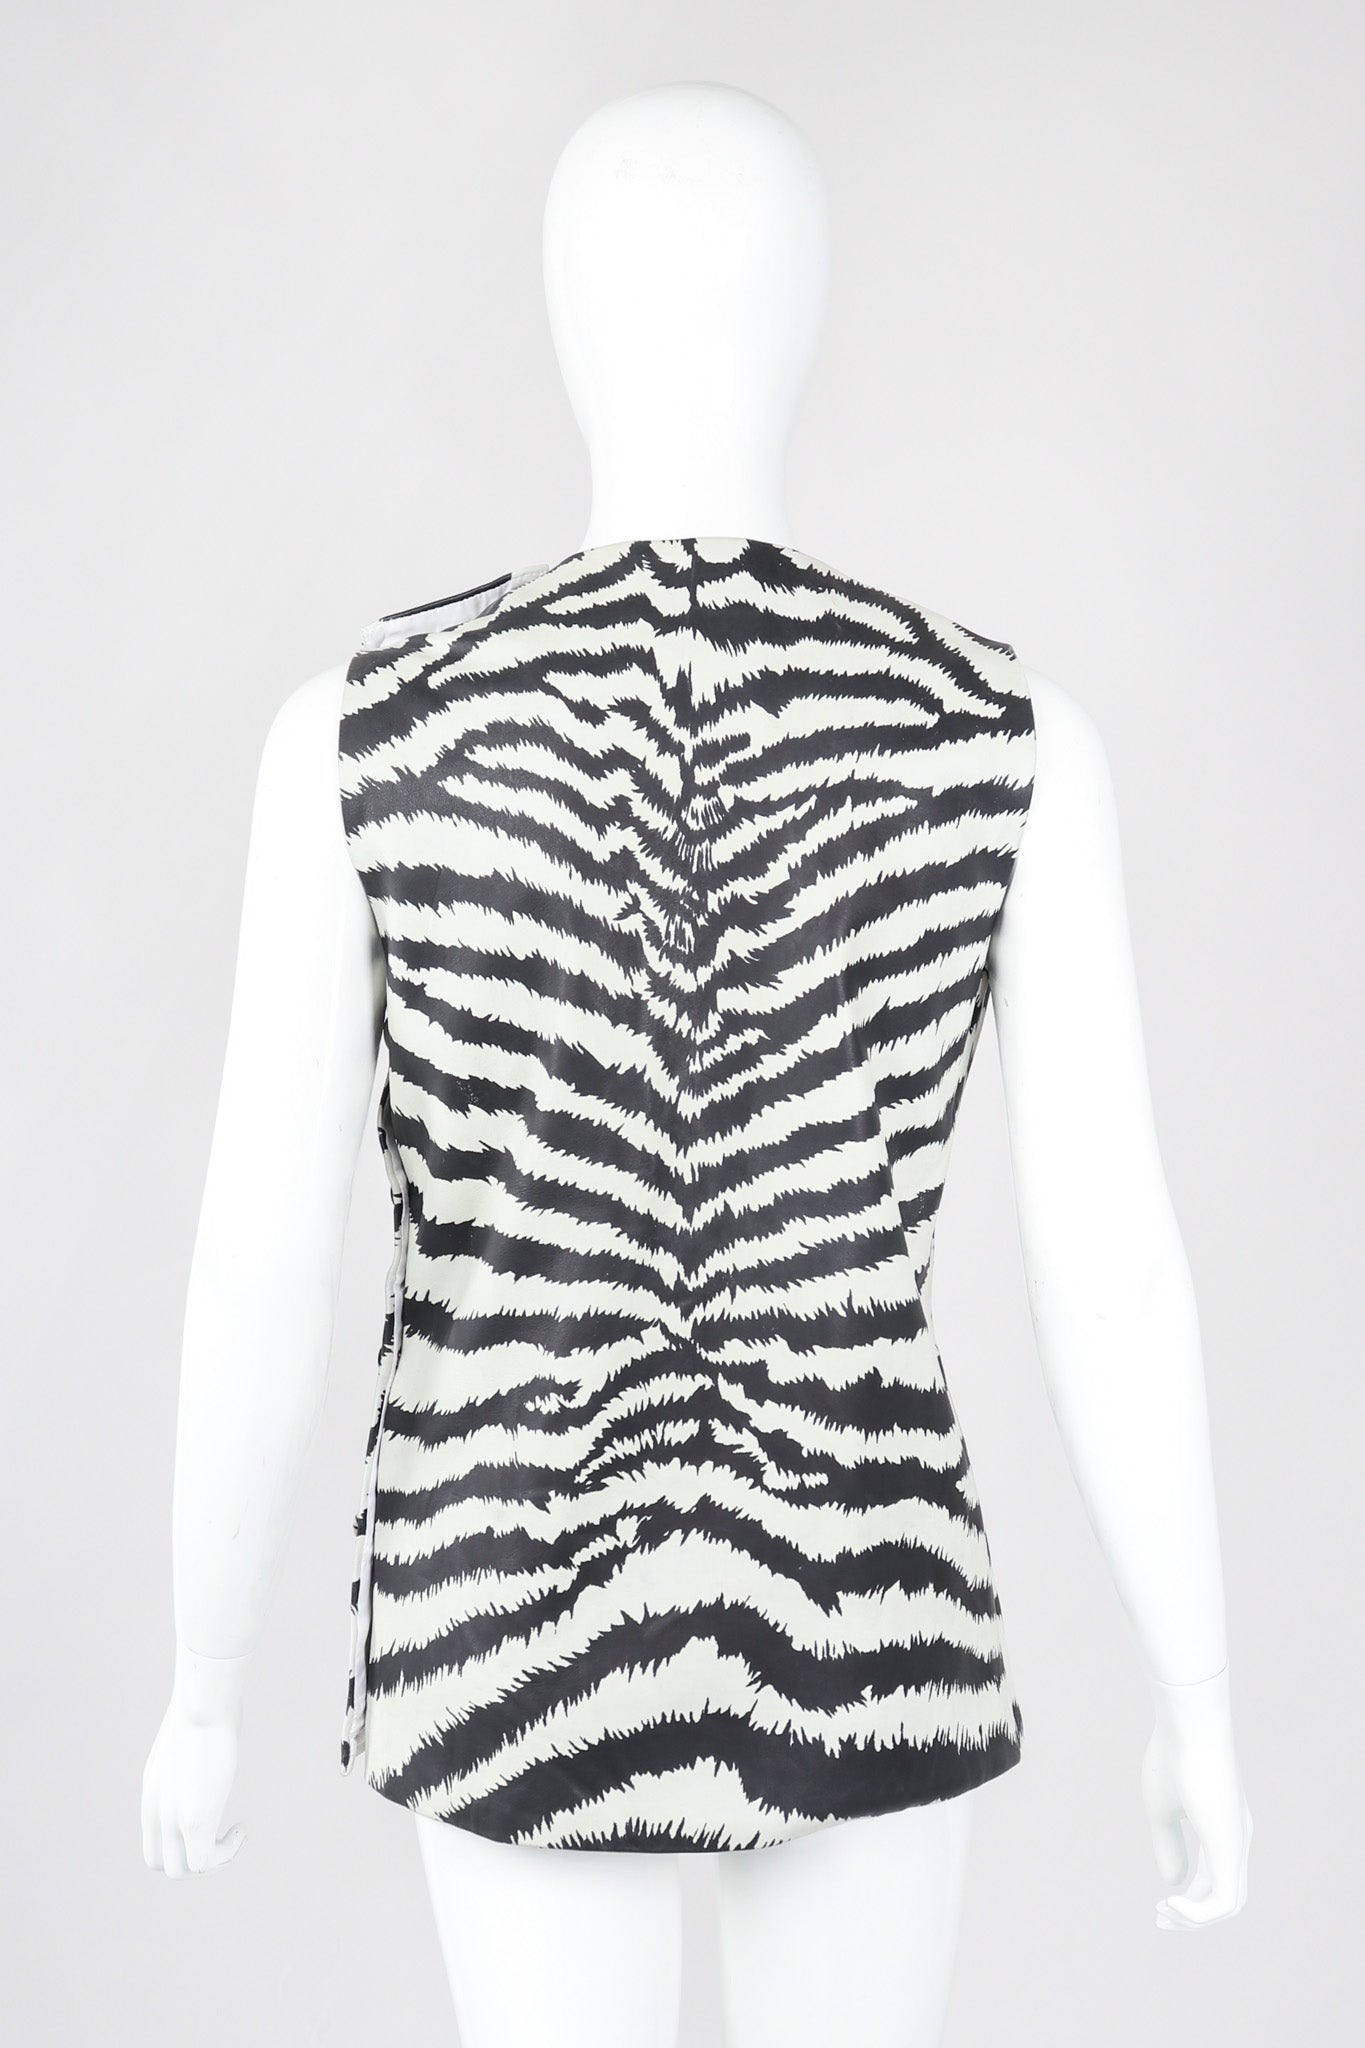 Recess Los Angeles Vintage Gino Paoli Leather Zebra Top